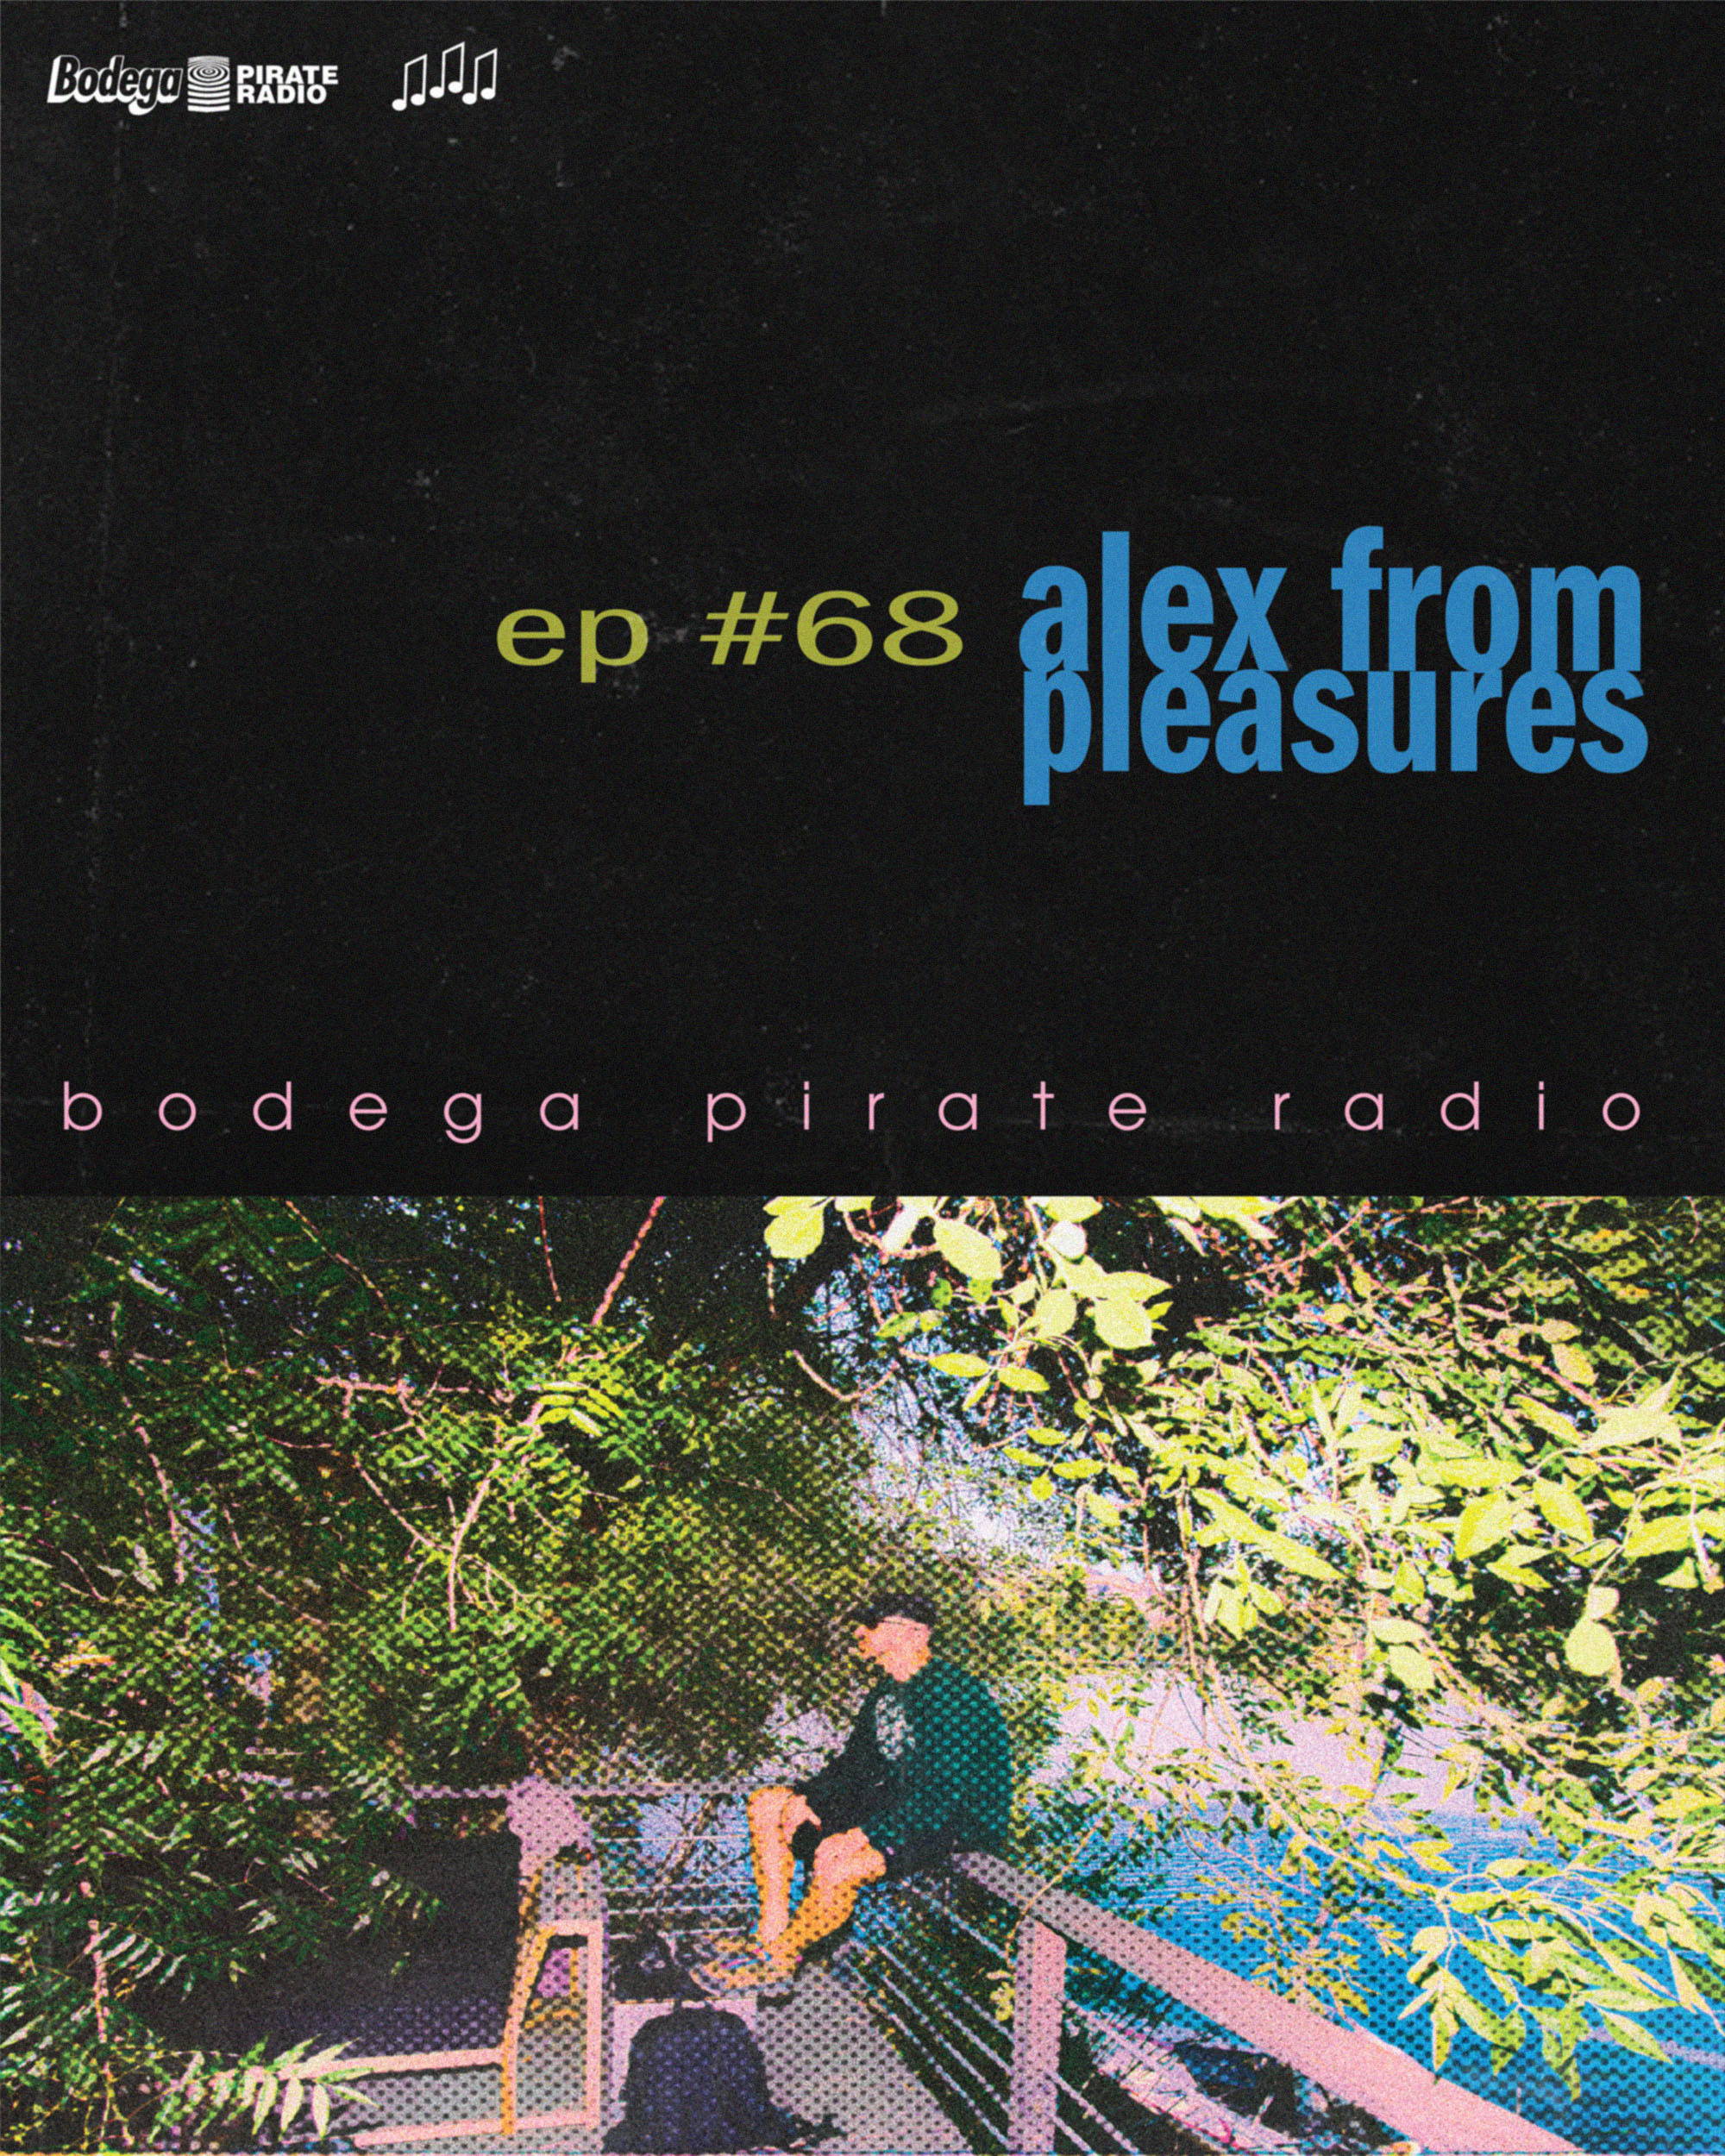 Cheap Juzsports Jordan Outlet Pirate Radio EP #68 - Alex from Pleasures